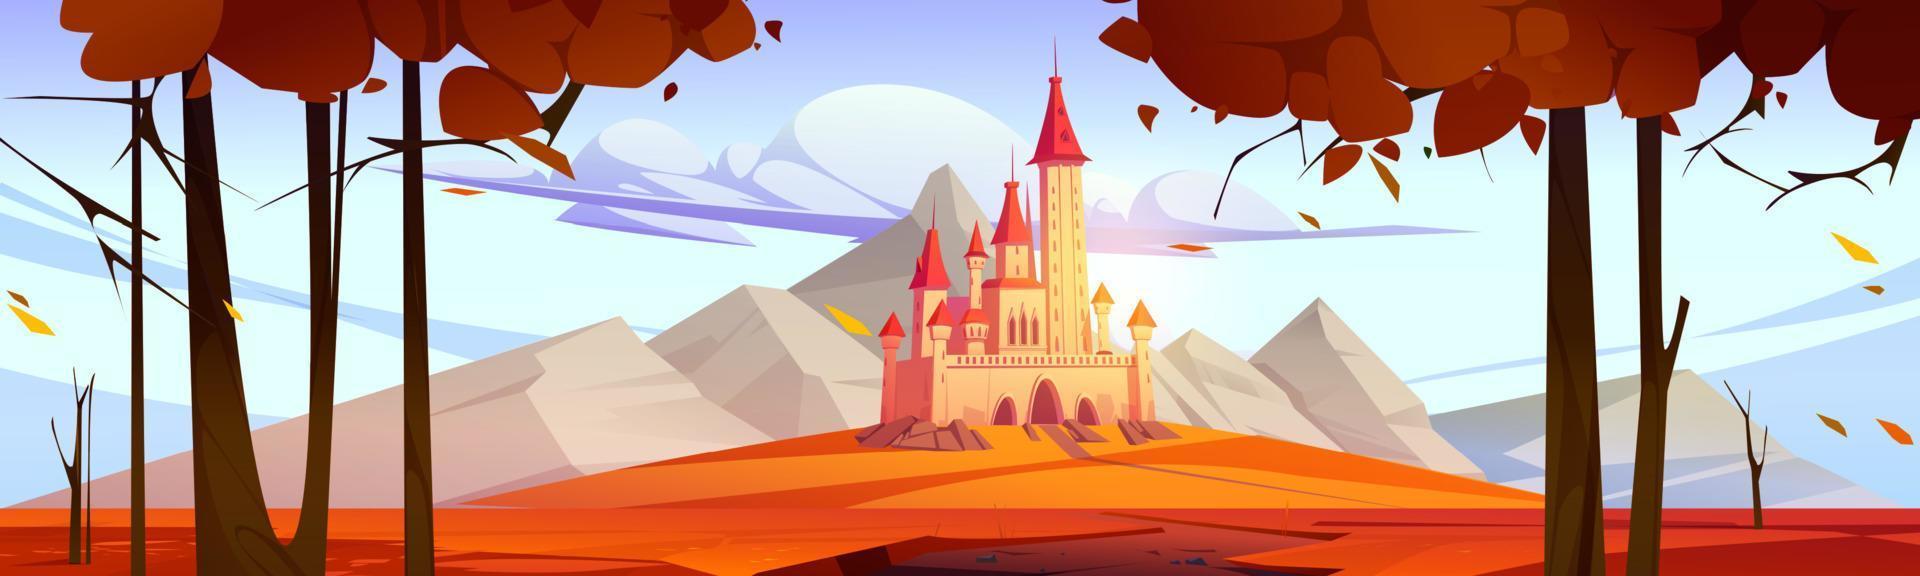 Fairy tale castle in mountain valley in autumn vector